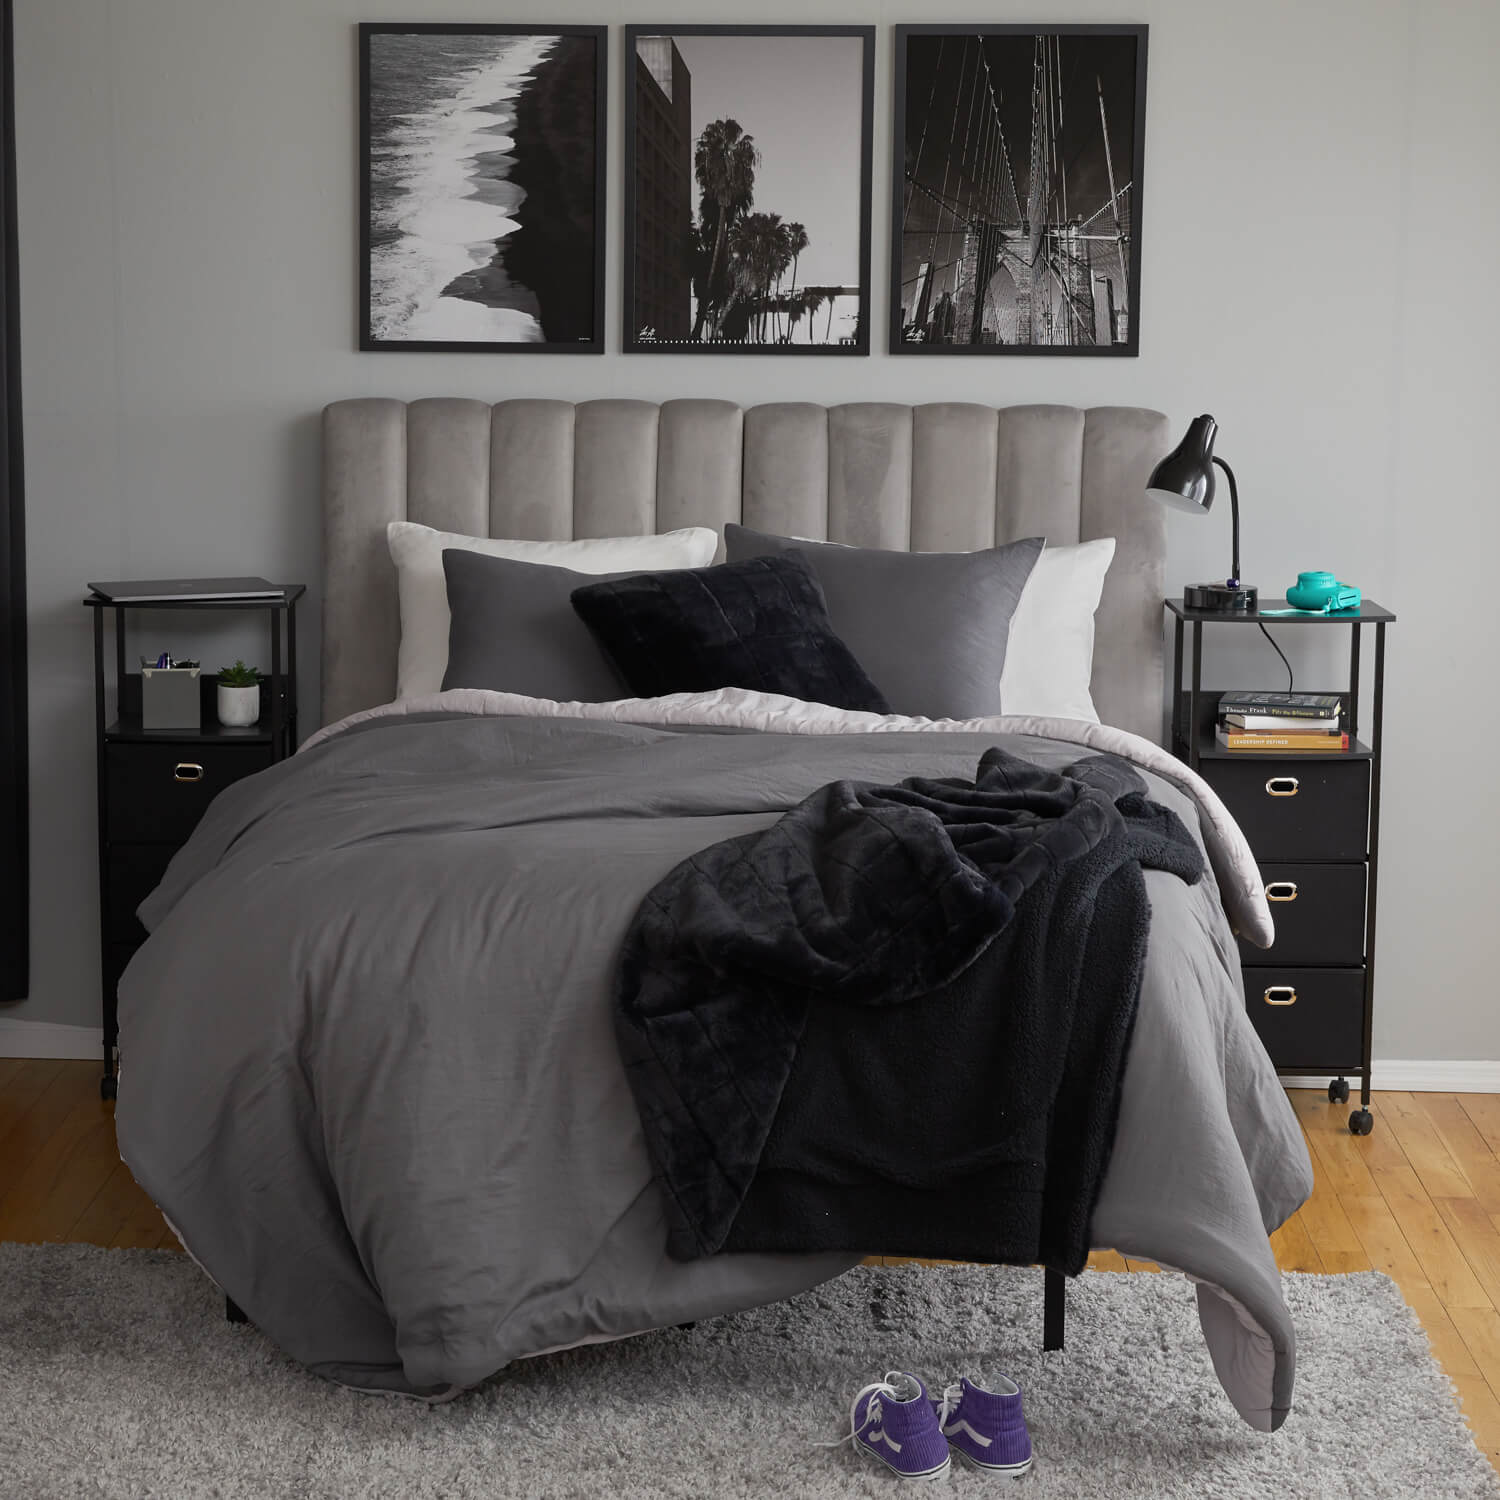 Dormify Faux Fur Seat Cushion, Dorm Essentials - Dormify